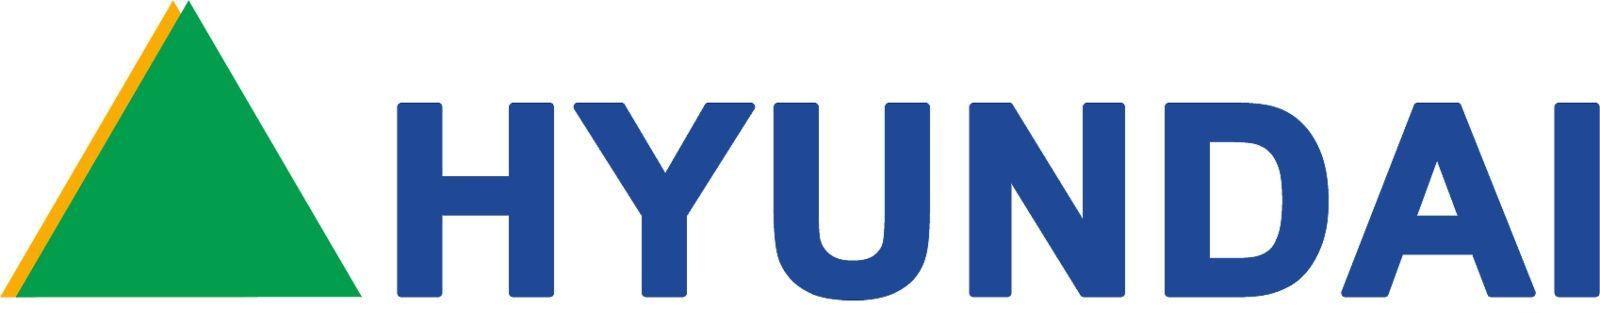 Hyundai Logo - Behind the Badge: The Secret Meaning of the Hyundai Logo - The News ...